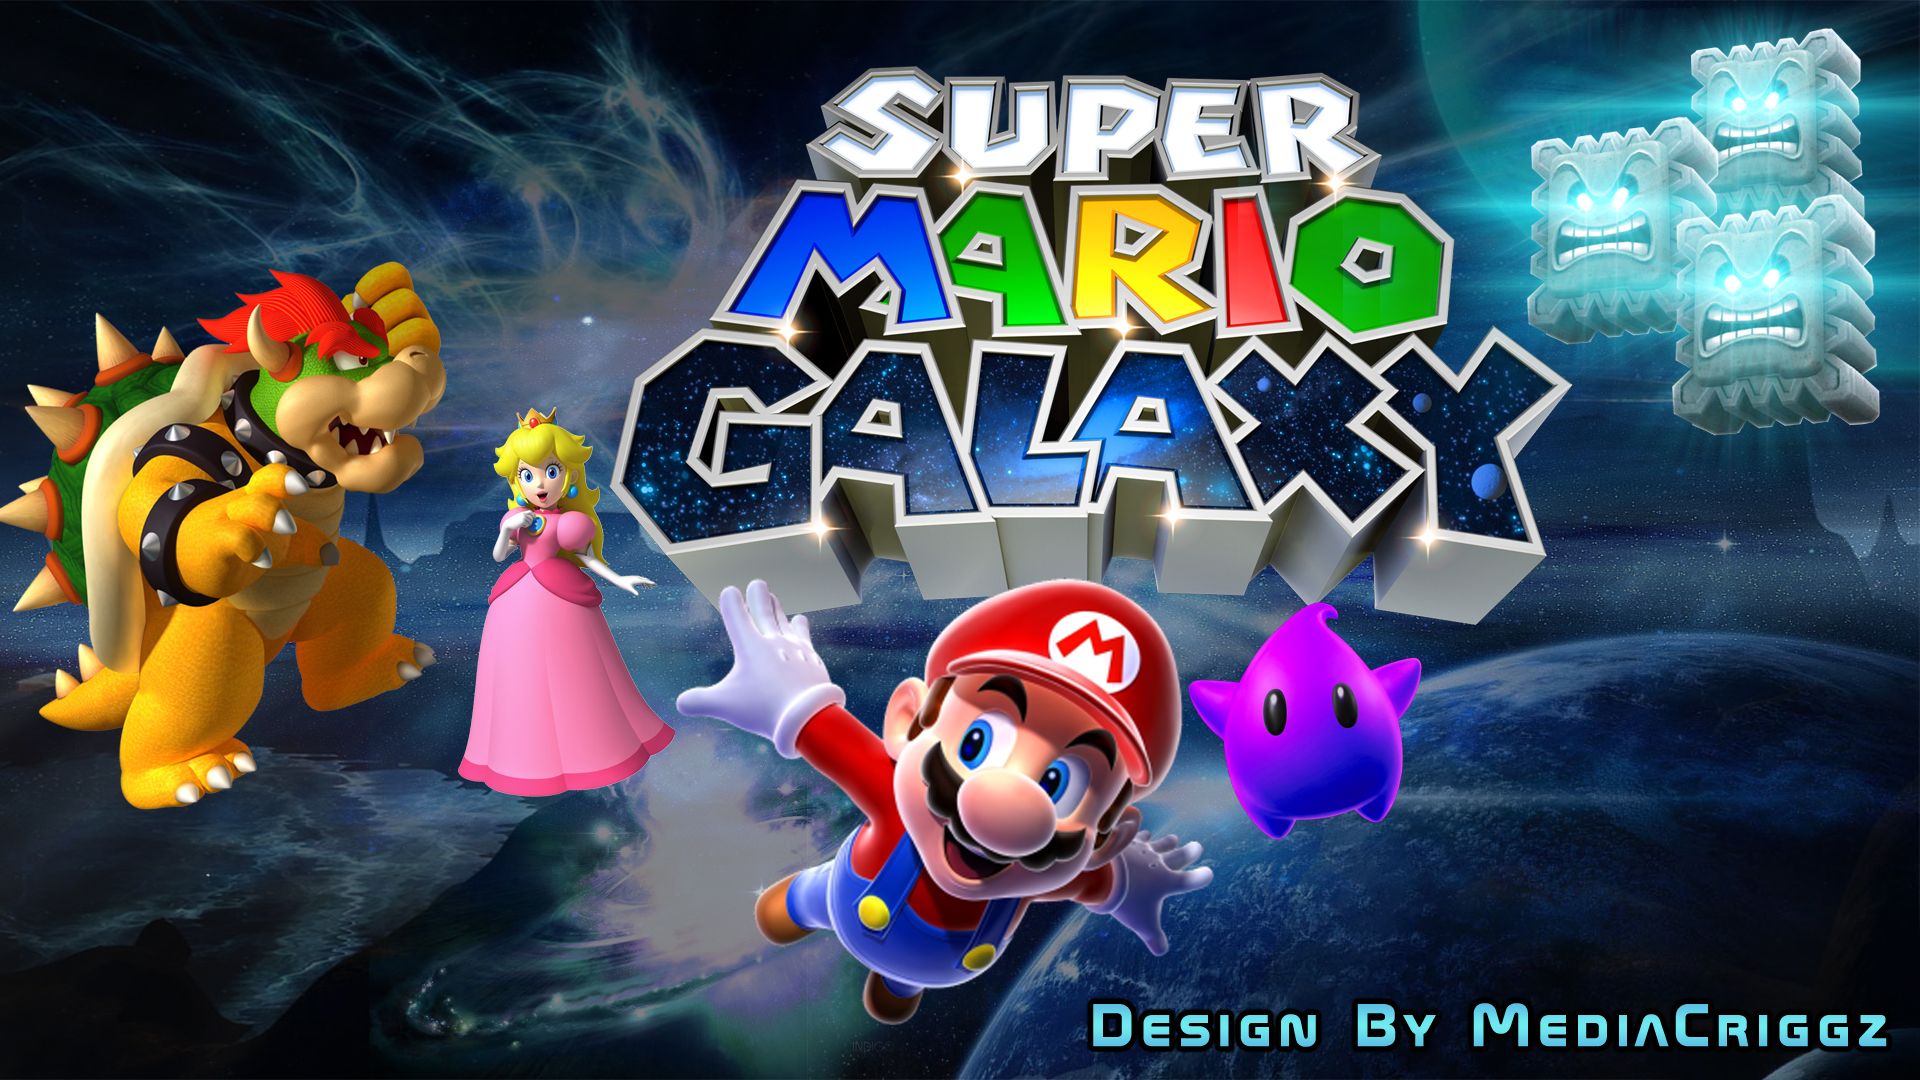 Super Mario Galaxy Wallpaper by MediaCriggz on DeviantArt